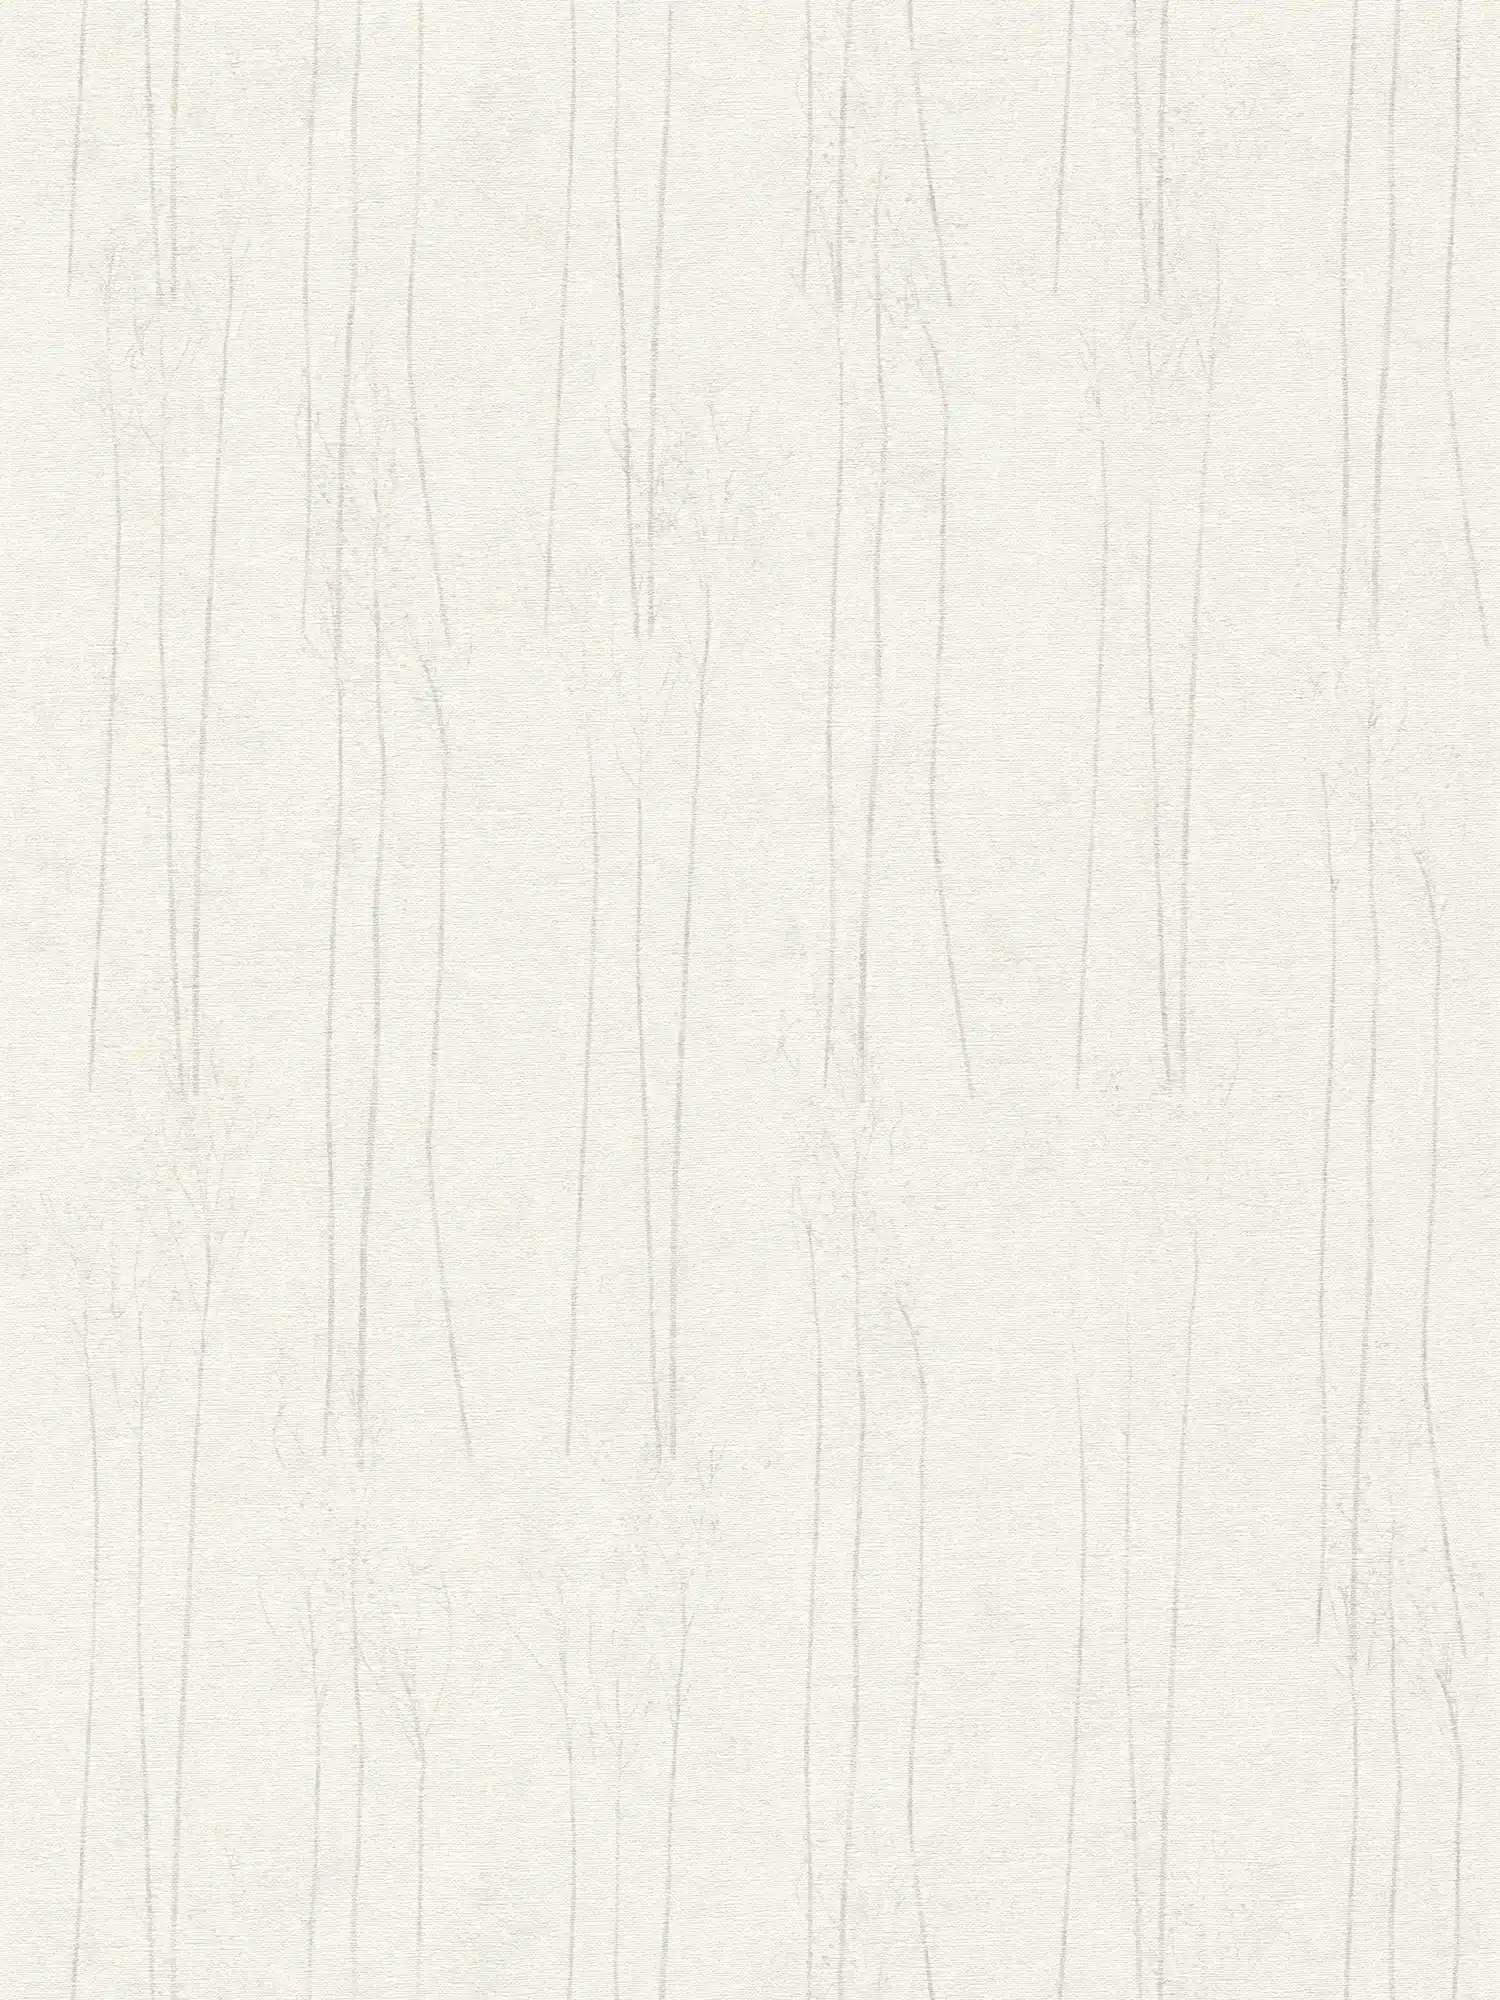 Carta da parati bianca in stile Scandi con motivi naturali - grigio, bianco
